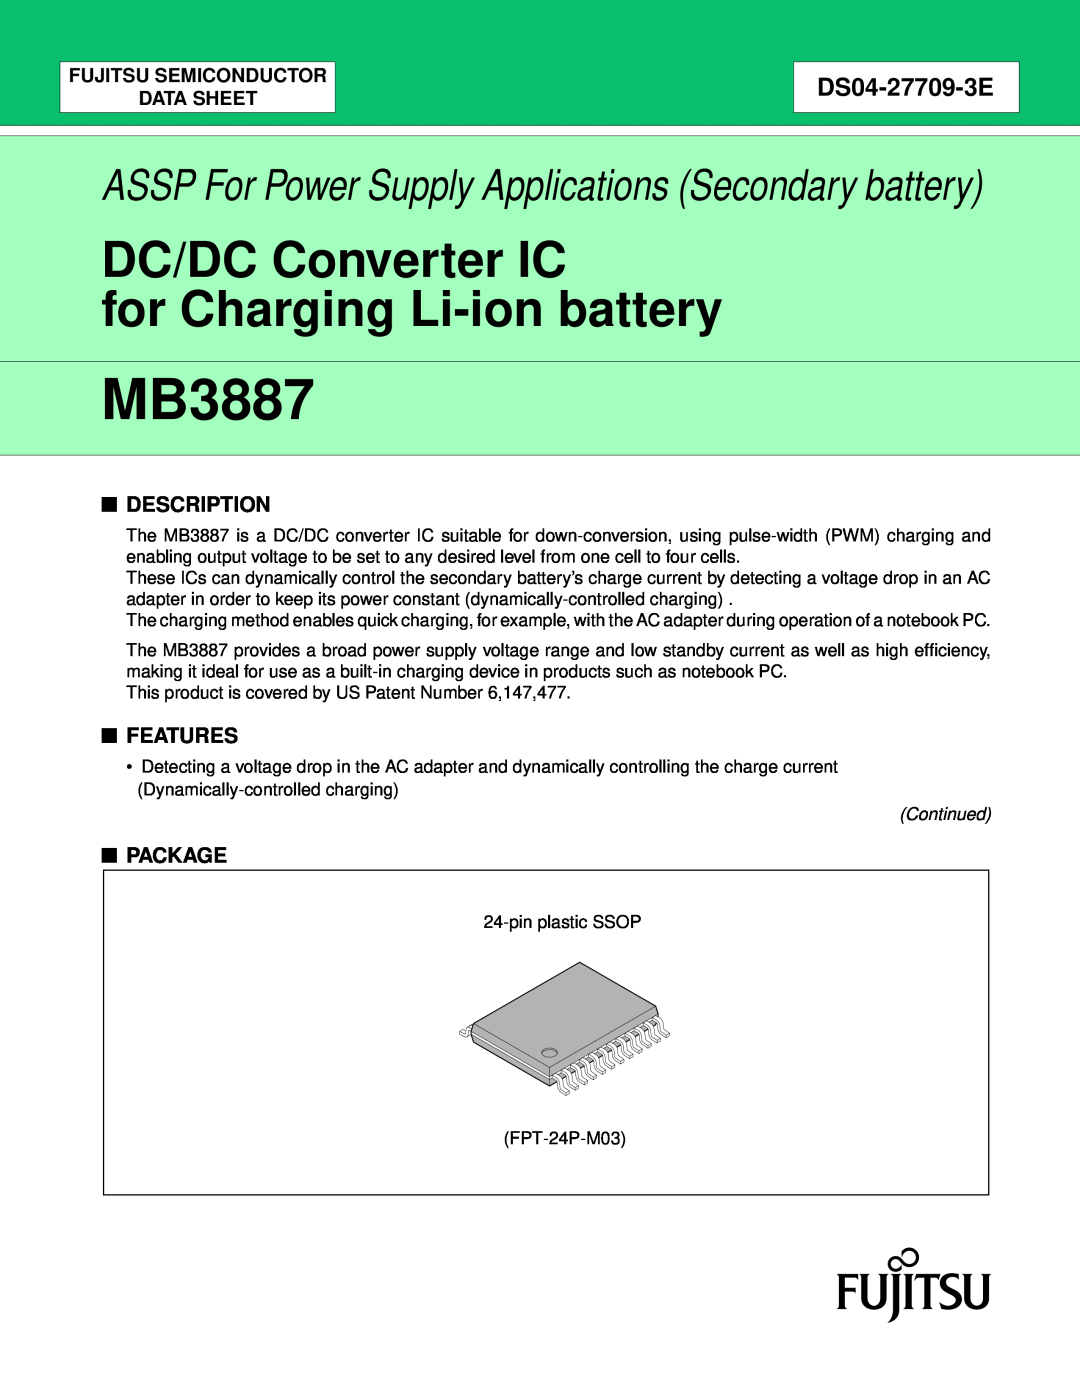 Fujitsu MB3887 manual Description, Features, Package, Fujitsu Semiconductor Data Sheet, DS04-27709-3E 